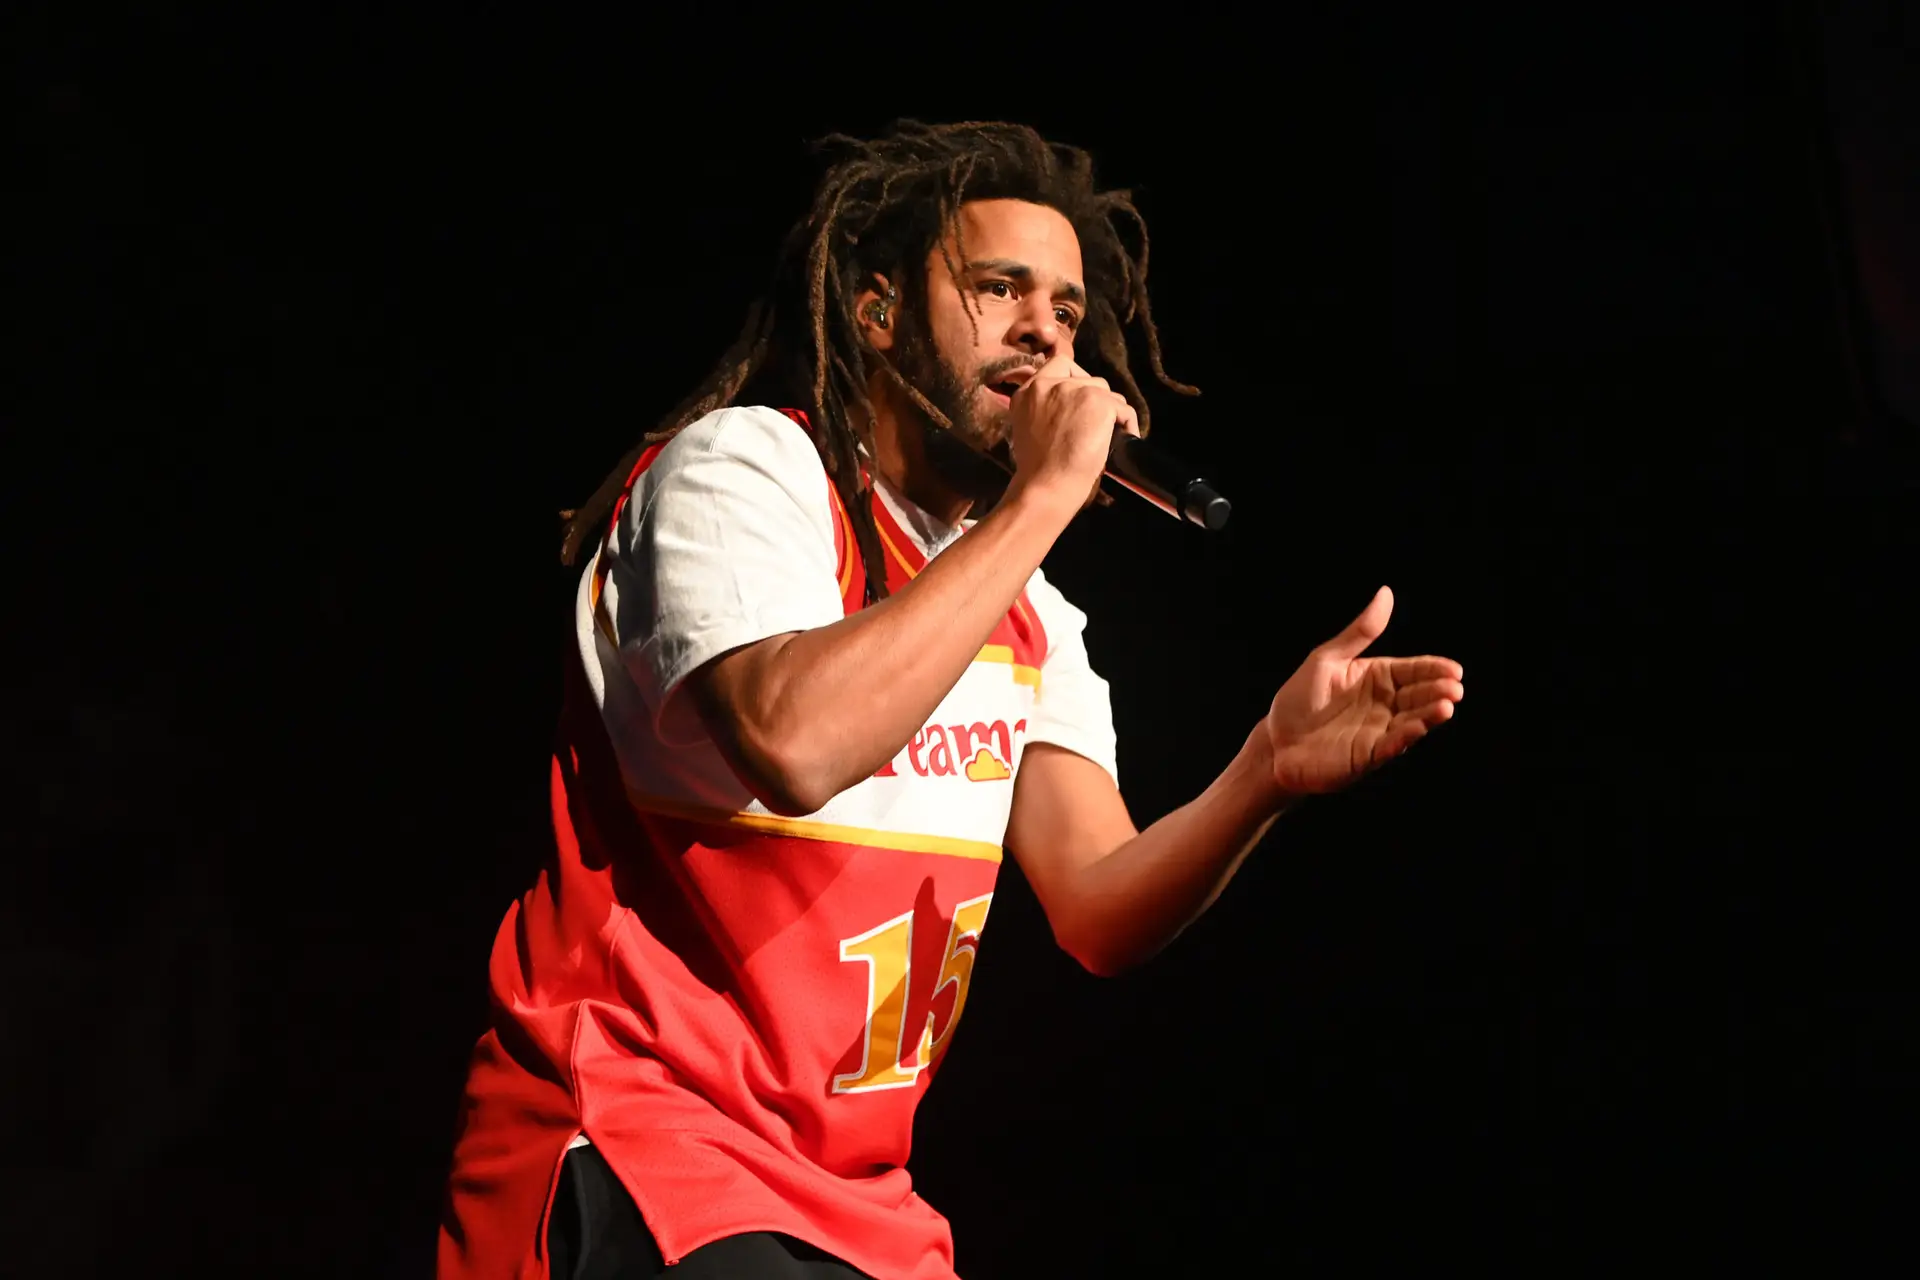 Rapper norte-americano J. Cole atua em julho no festival Rolling Loud Portugal